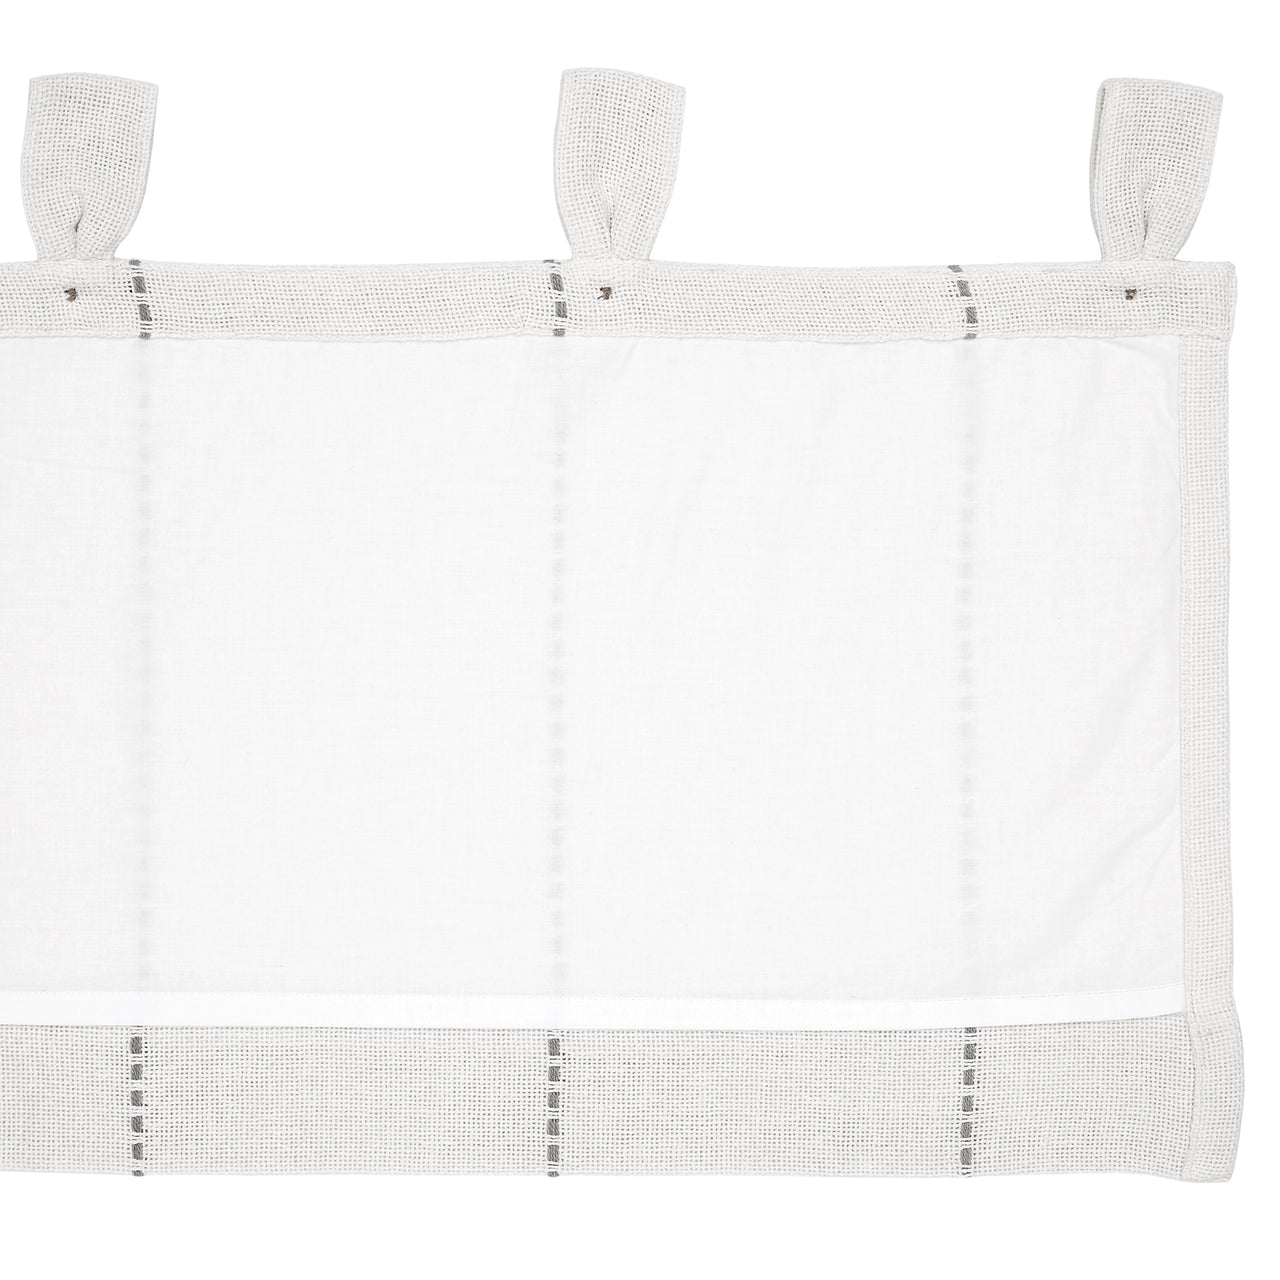 Stitched Burlap White Valance Curtain 16x90 VHC Brands